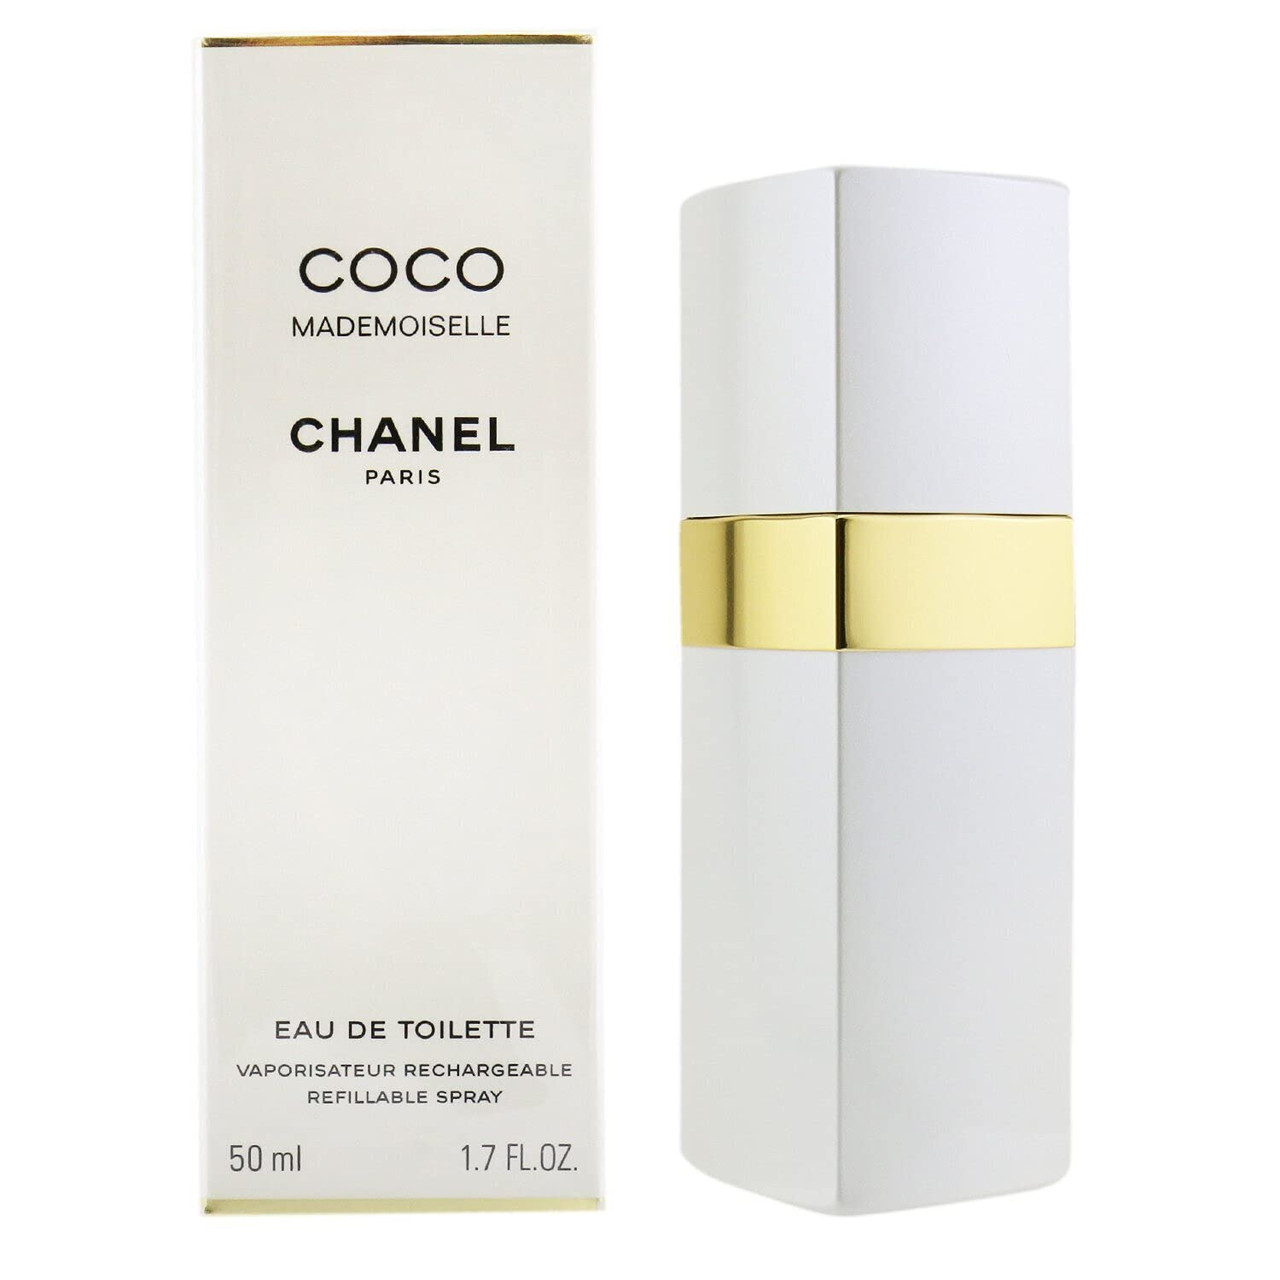 Coco Mademoiselle Eau De Toilette Refillable Spray – Chanel